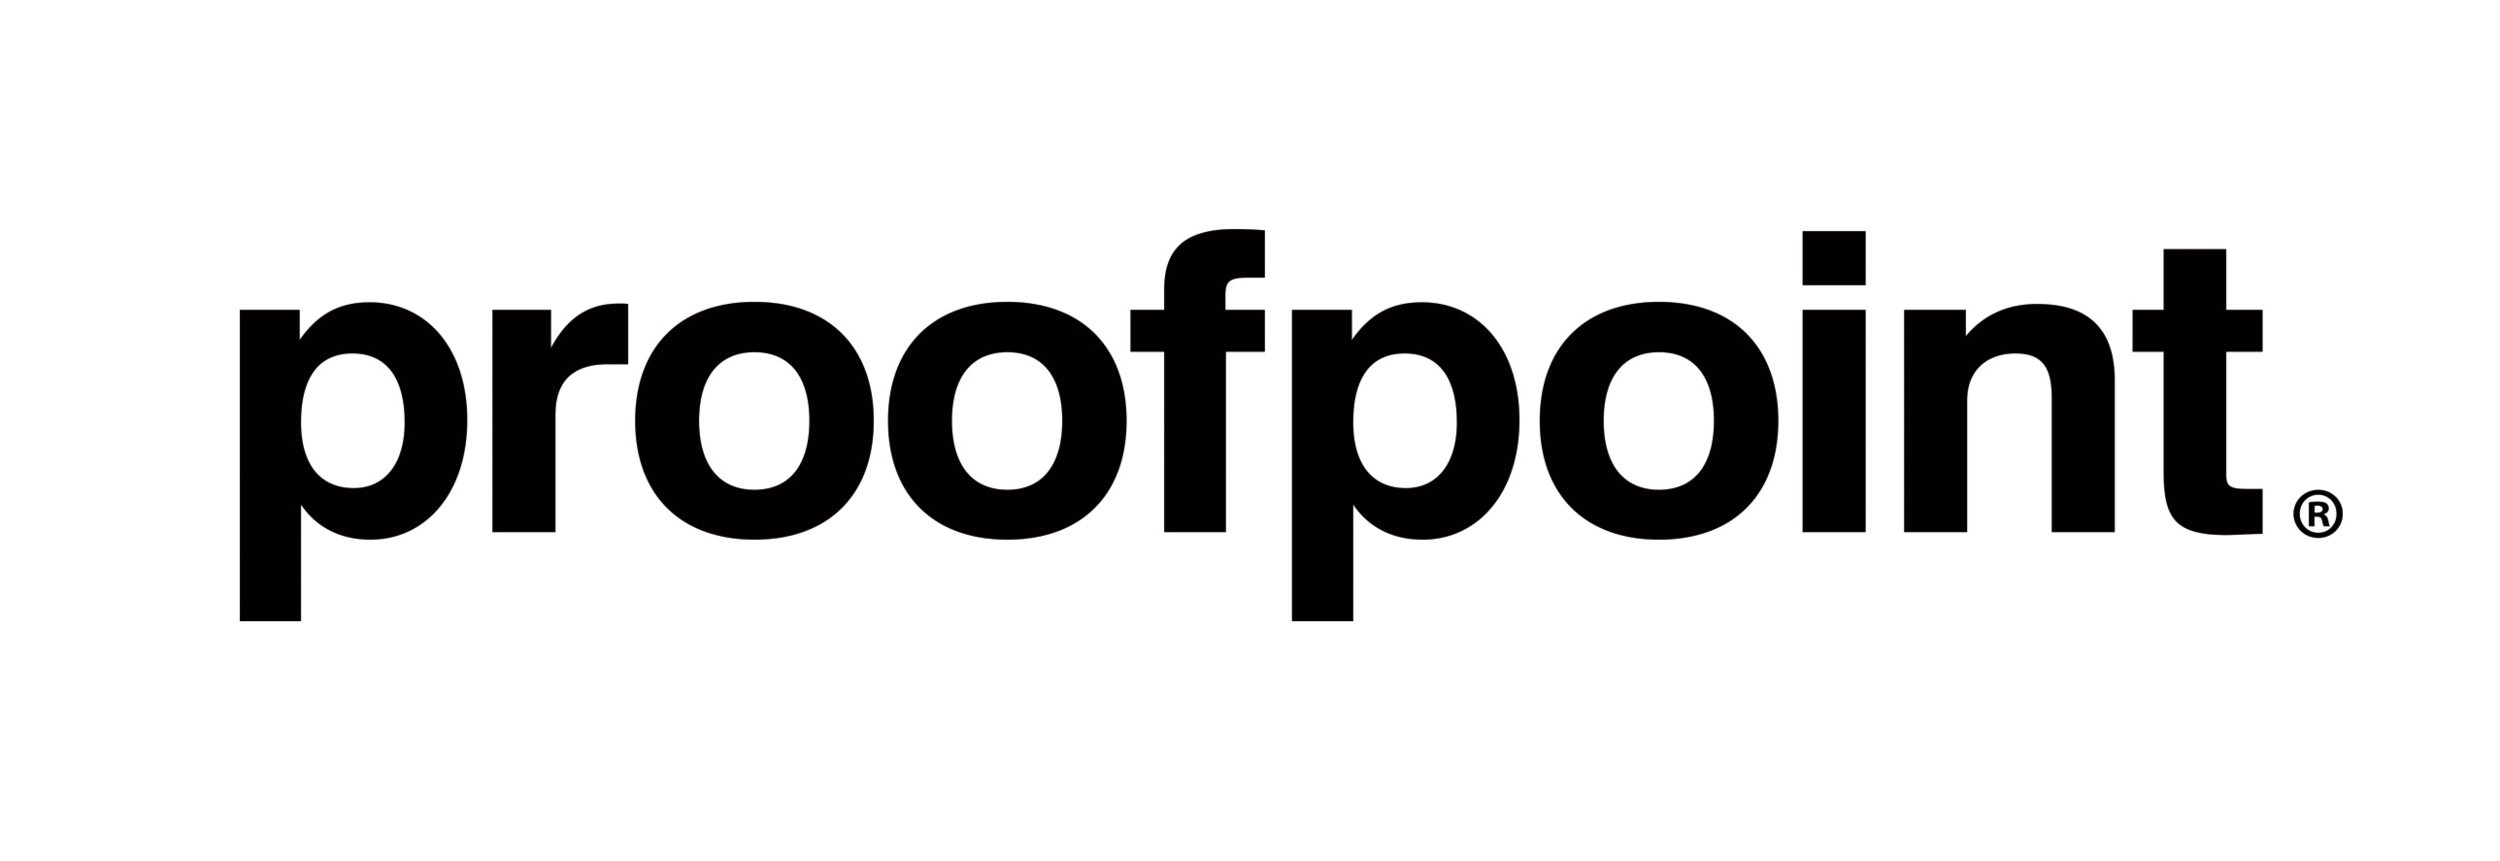 Proofpoint-logo-reg-K.png